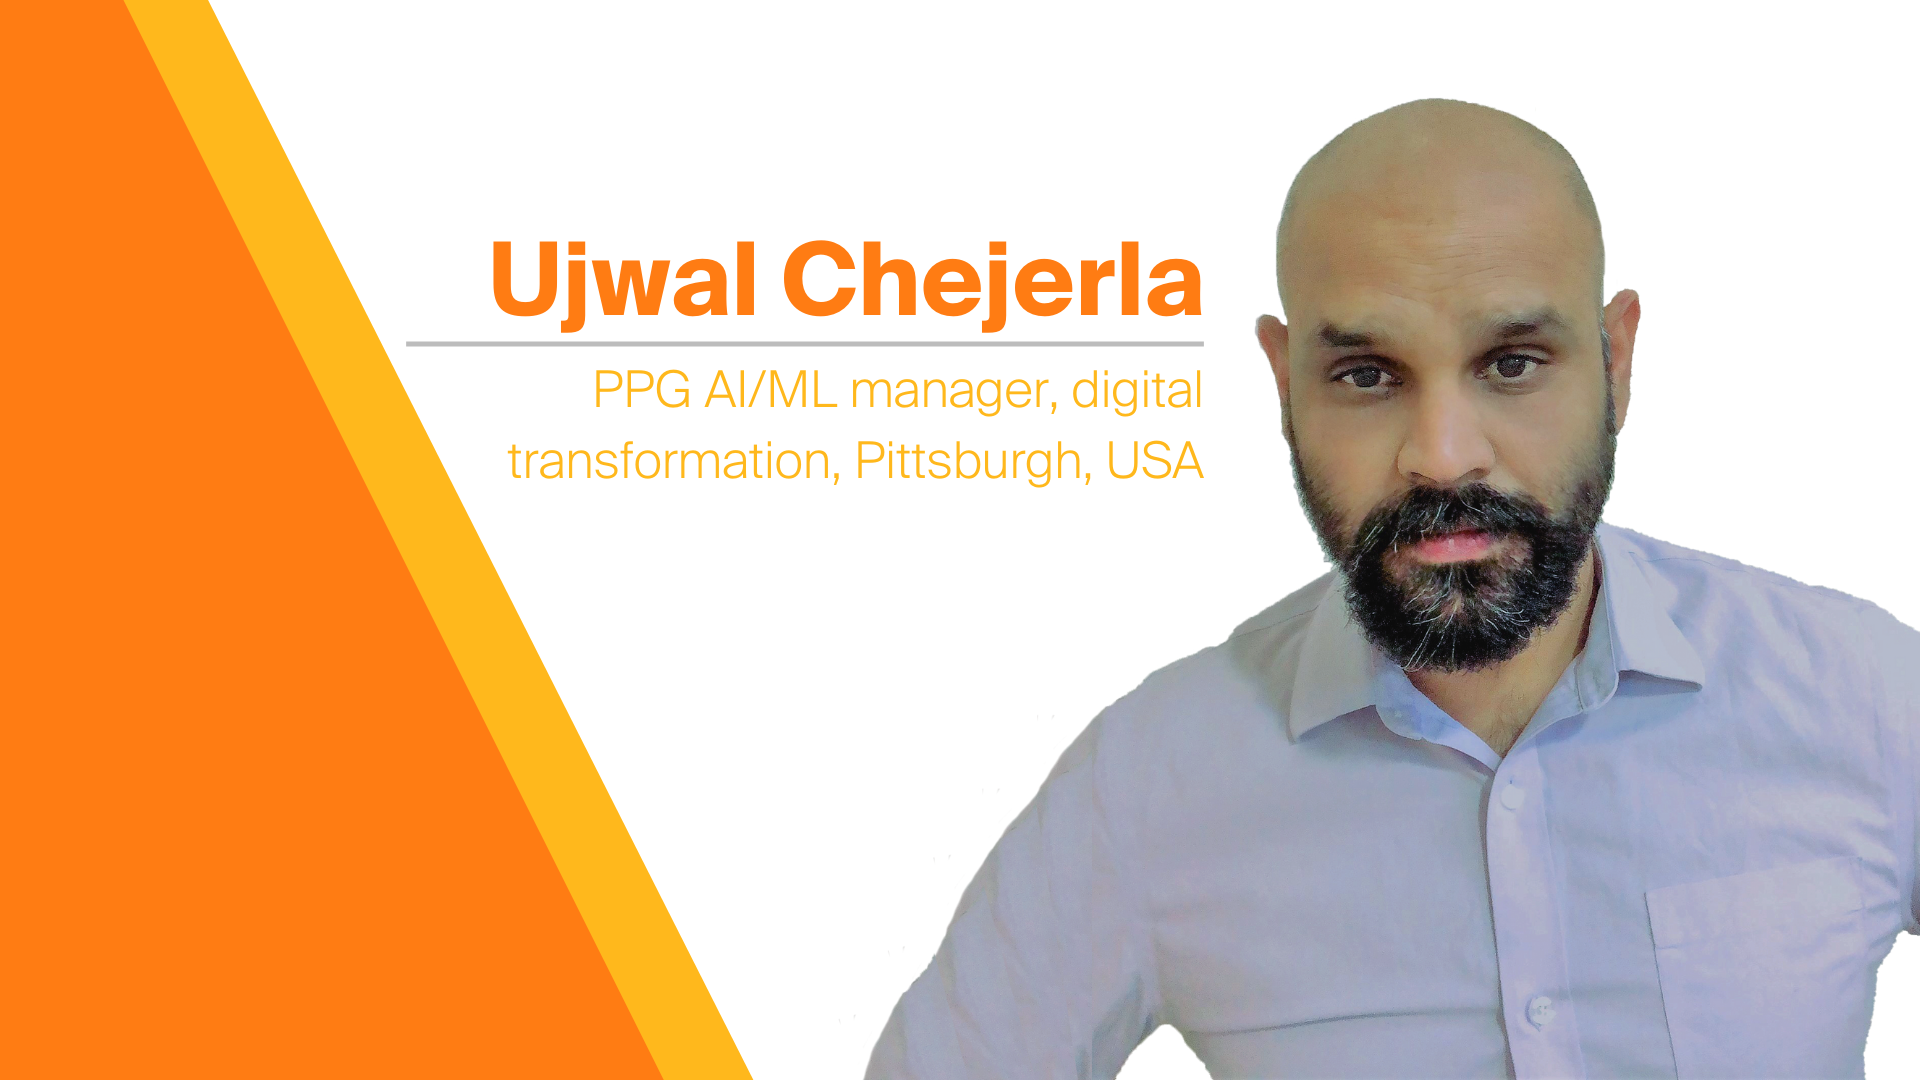 ppg-2021-ujwal-chejerla-digital-transformation-pittsburgh-usa.png